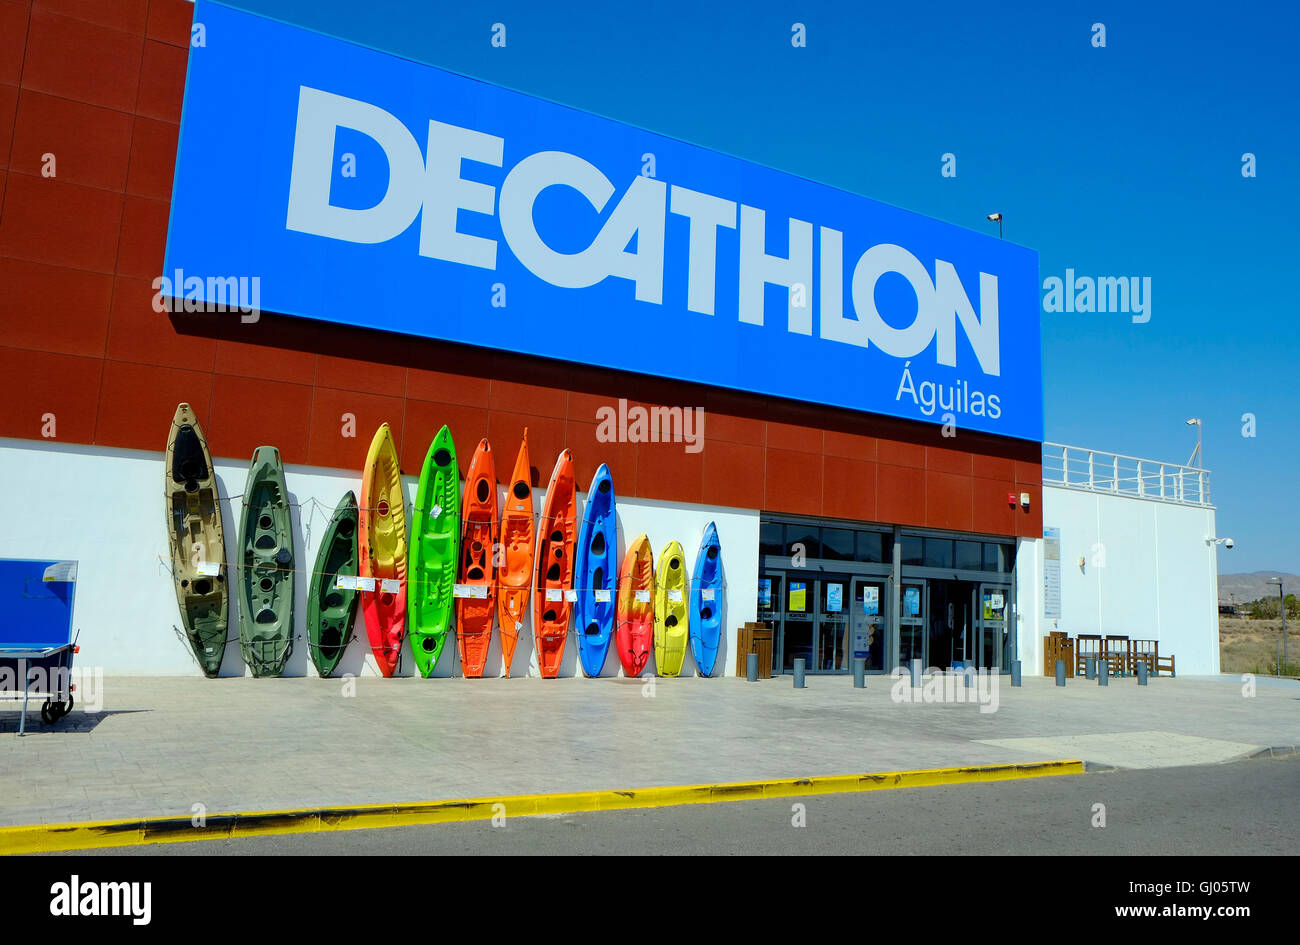 Negozio decathlon, Aguilas, Spagna Foto Stock